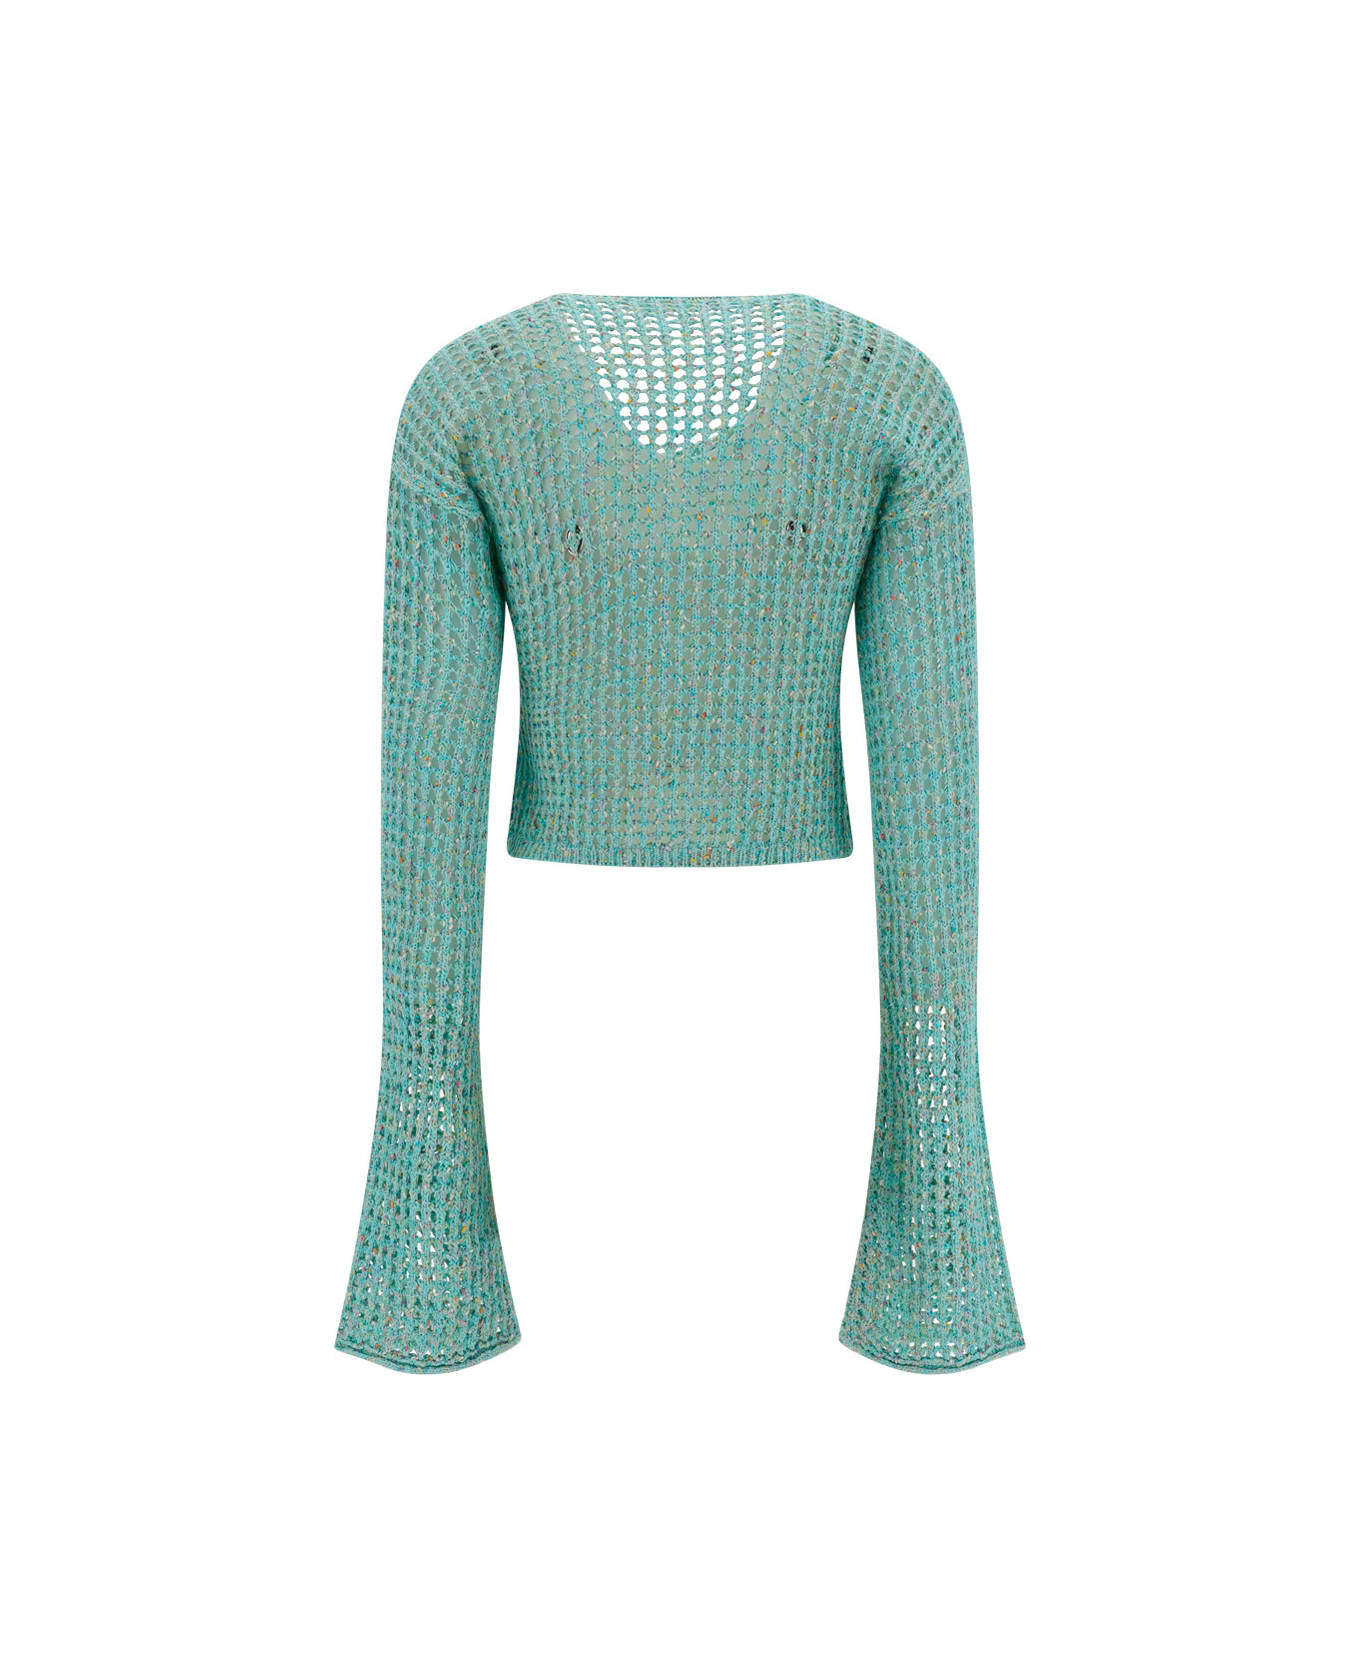 Acne Studios Sweater - Aqua Blue